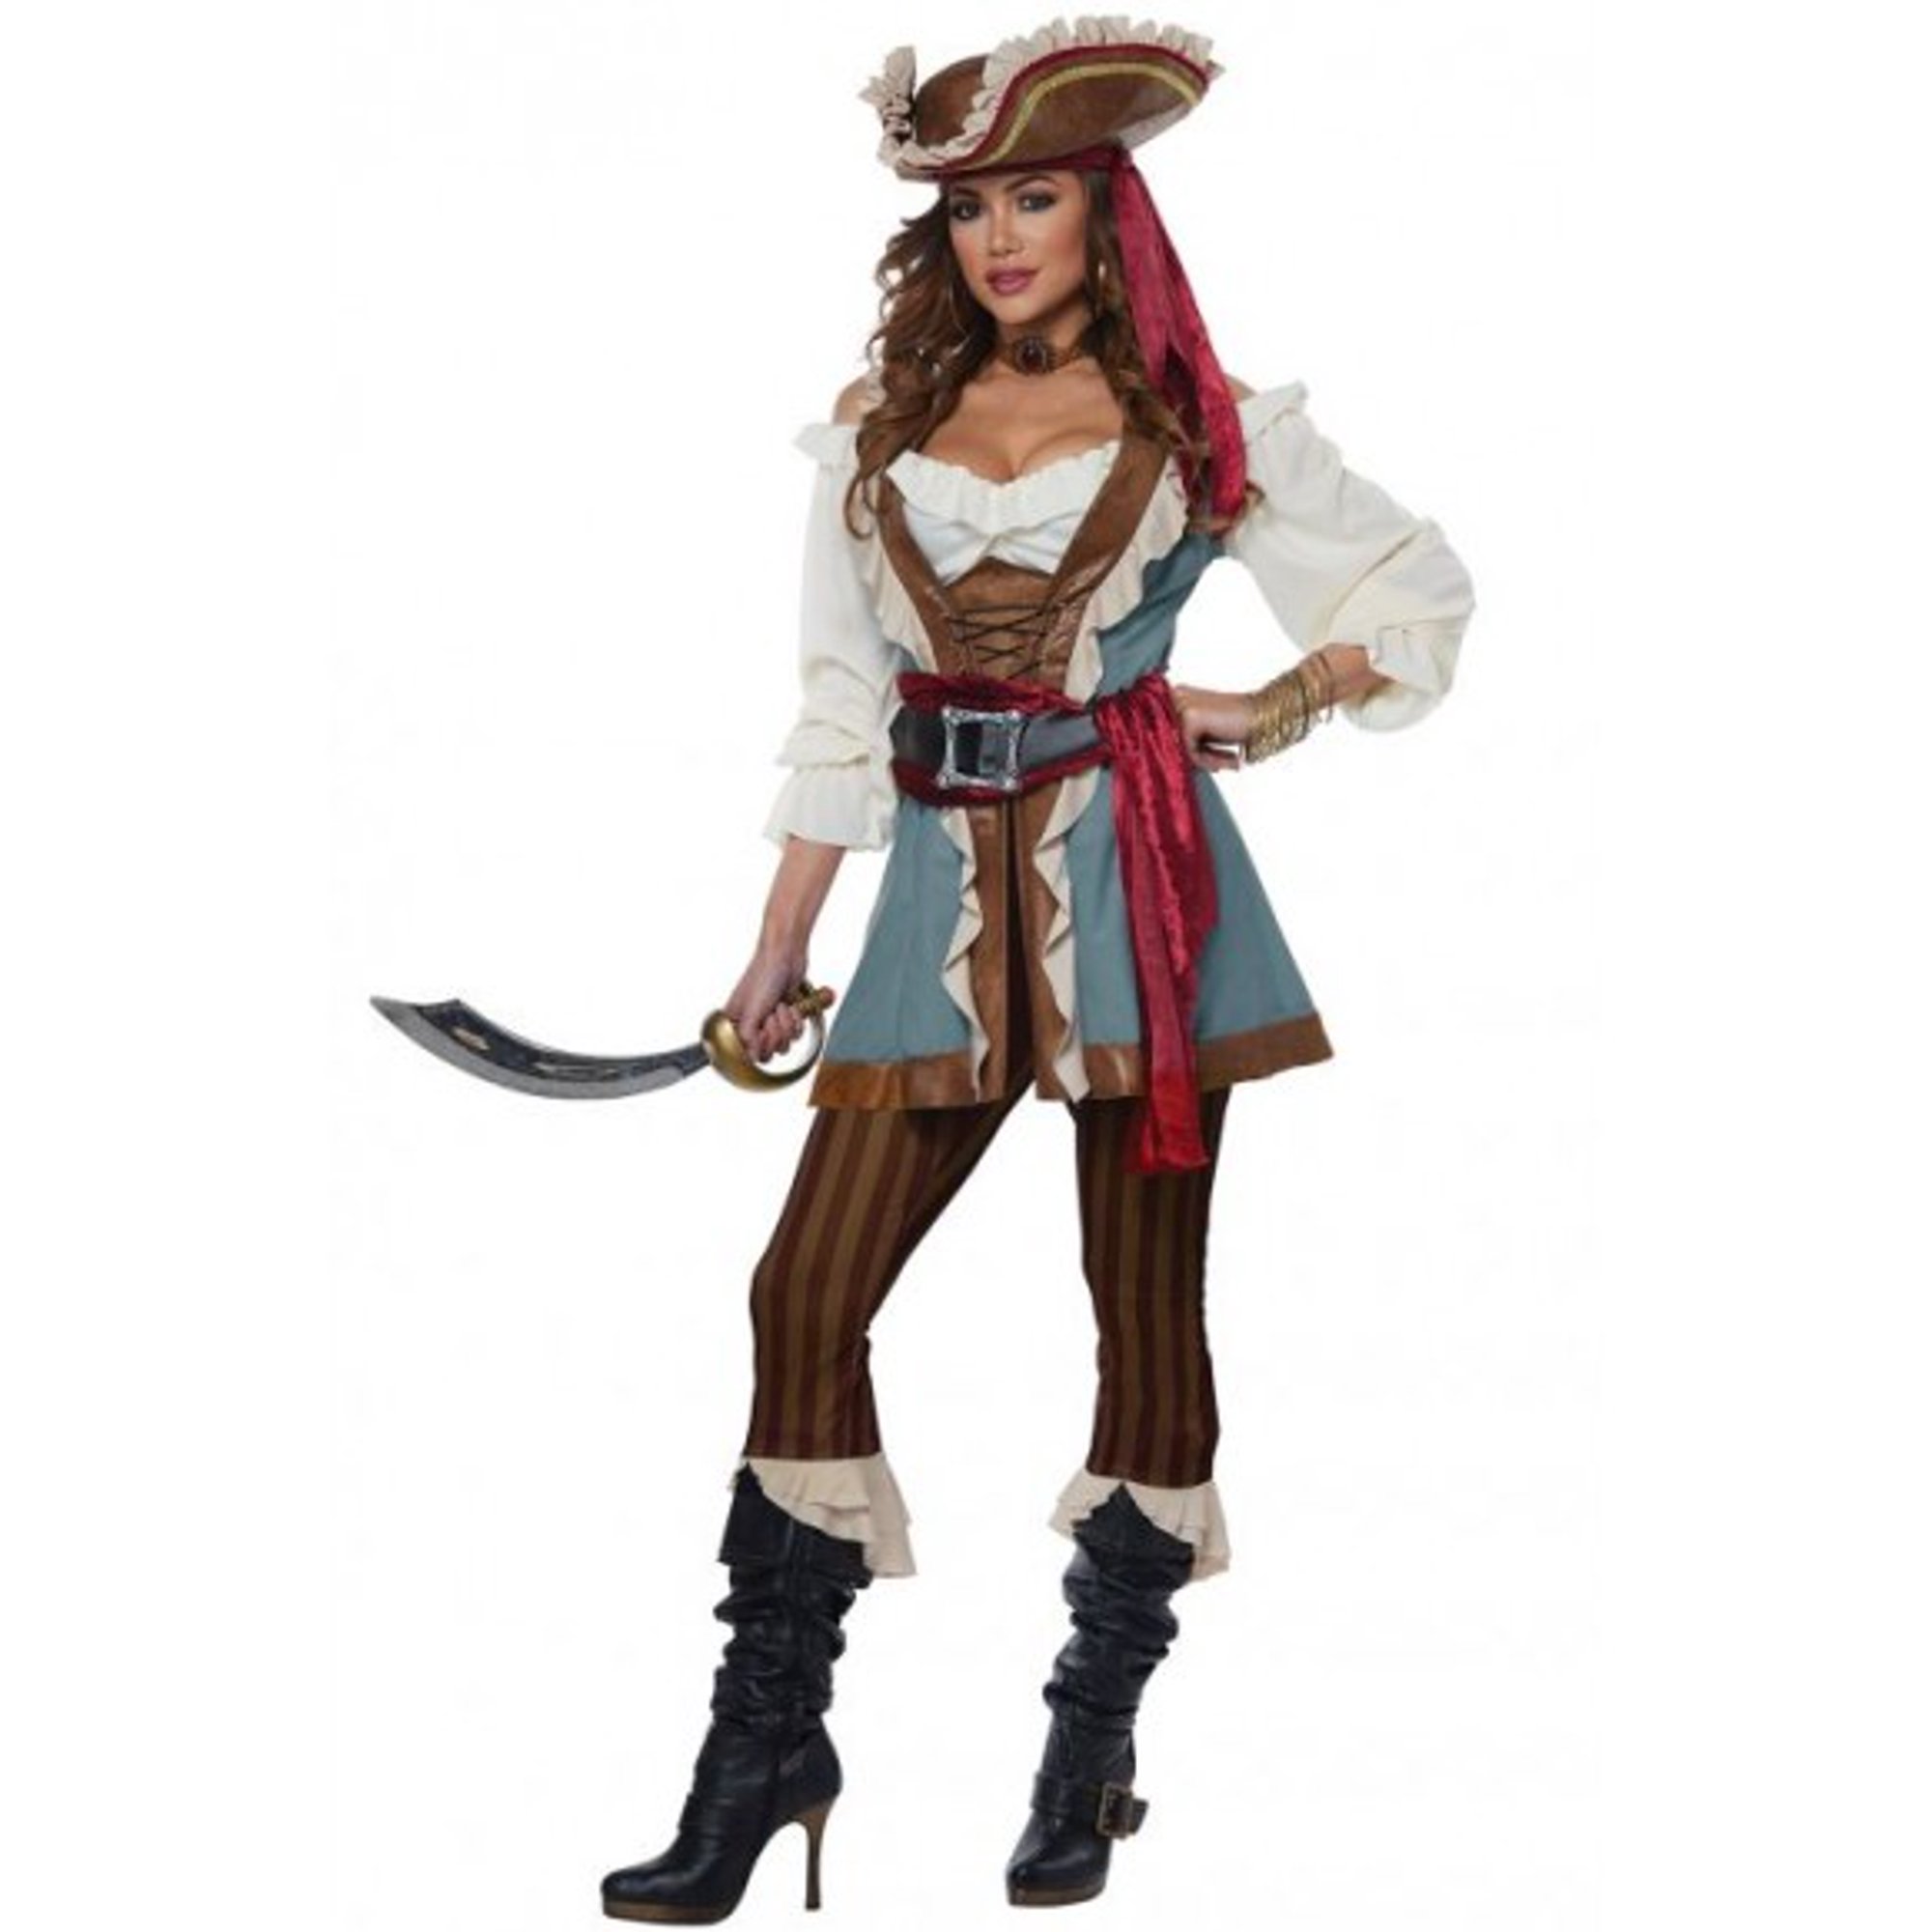 Disfraz de la mujer pirata premium rojo